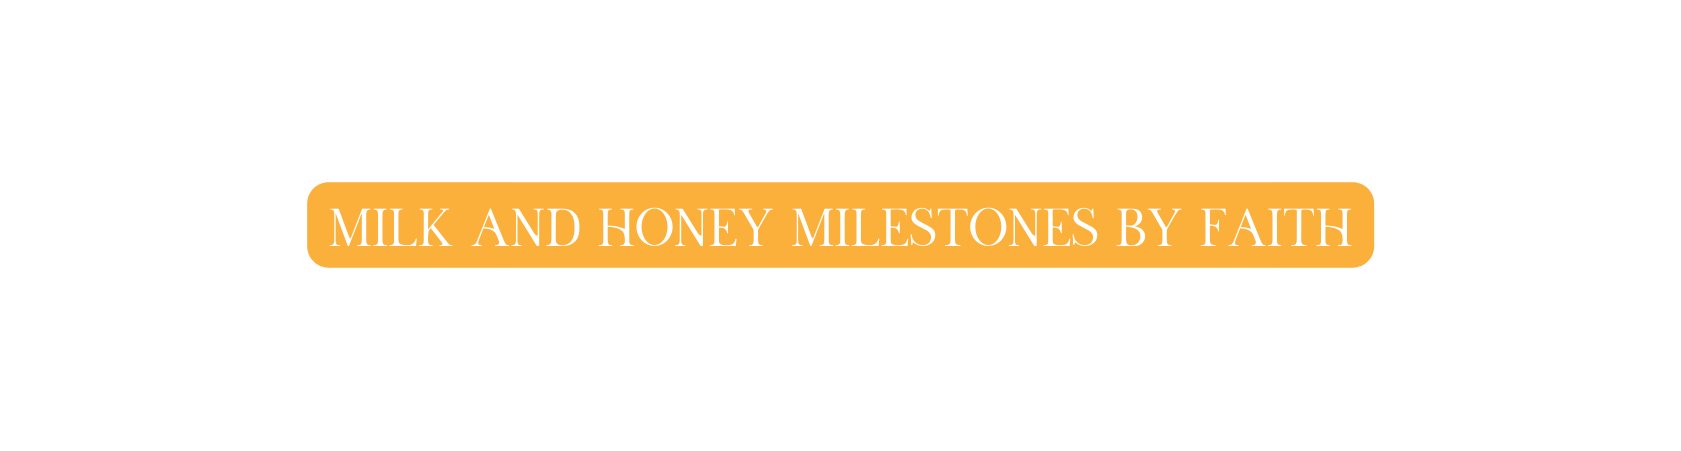 Milk and honey milestones by faith